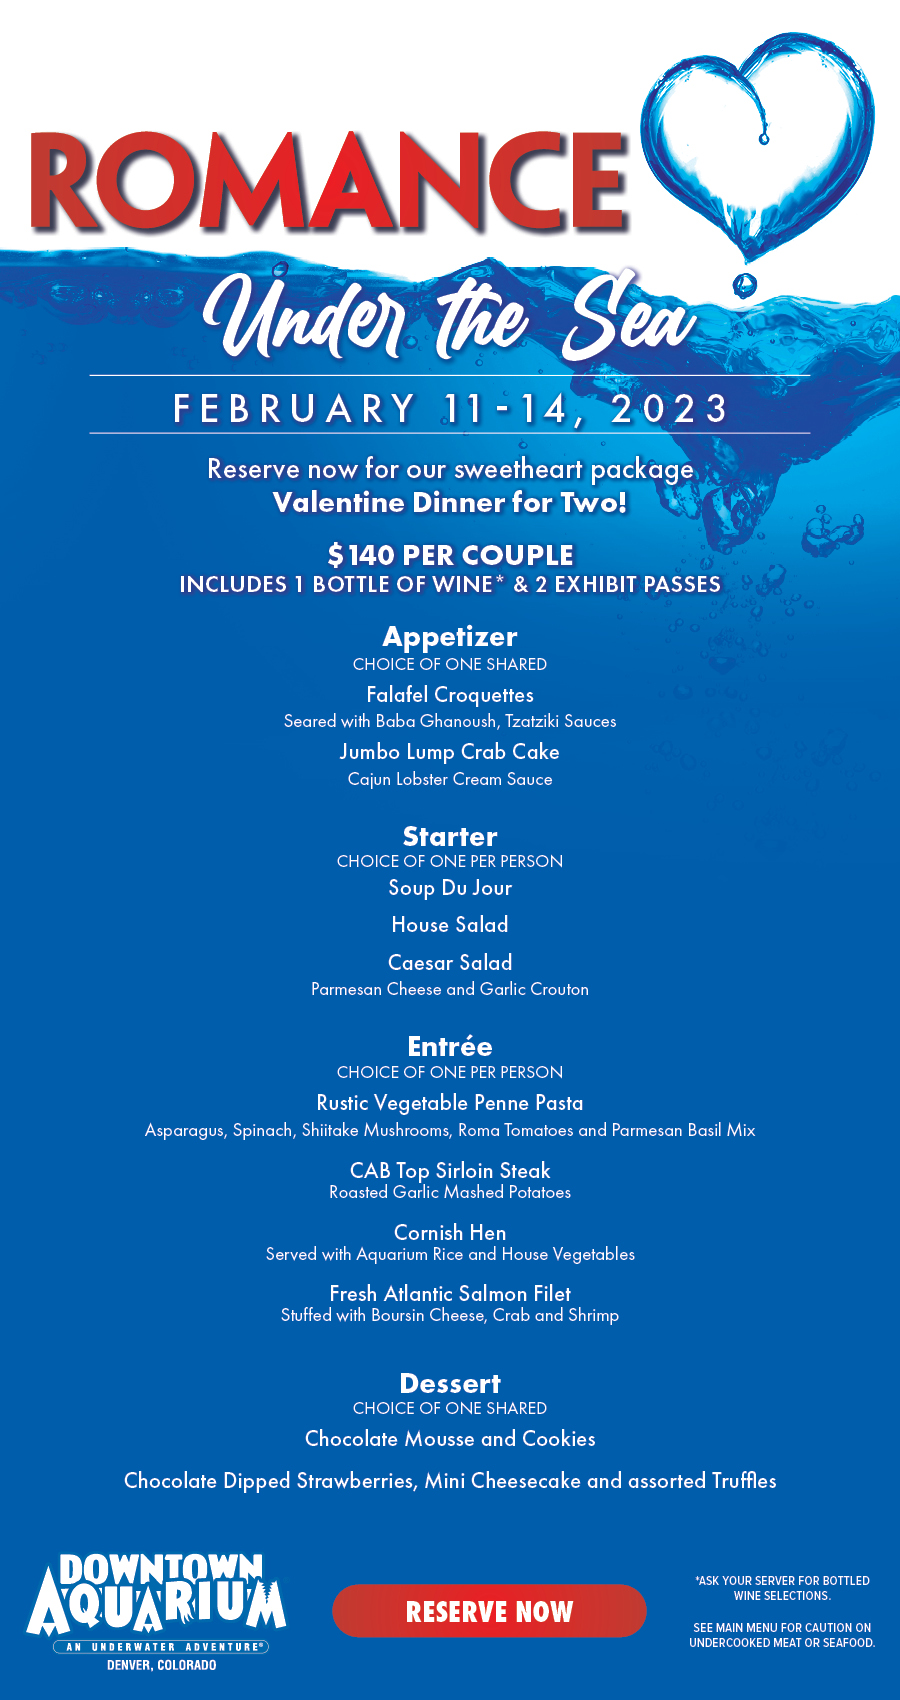 Downtown Aquarium - Romance Under The Sea - February 11th - 14th